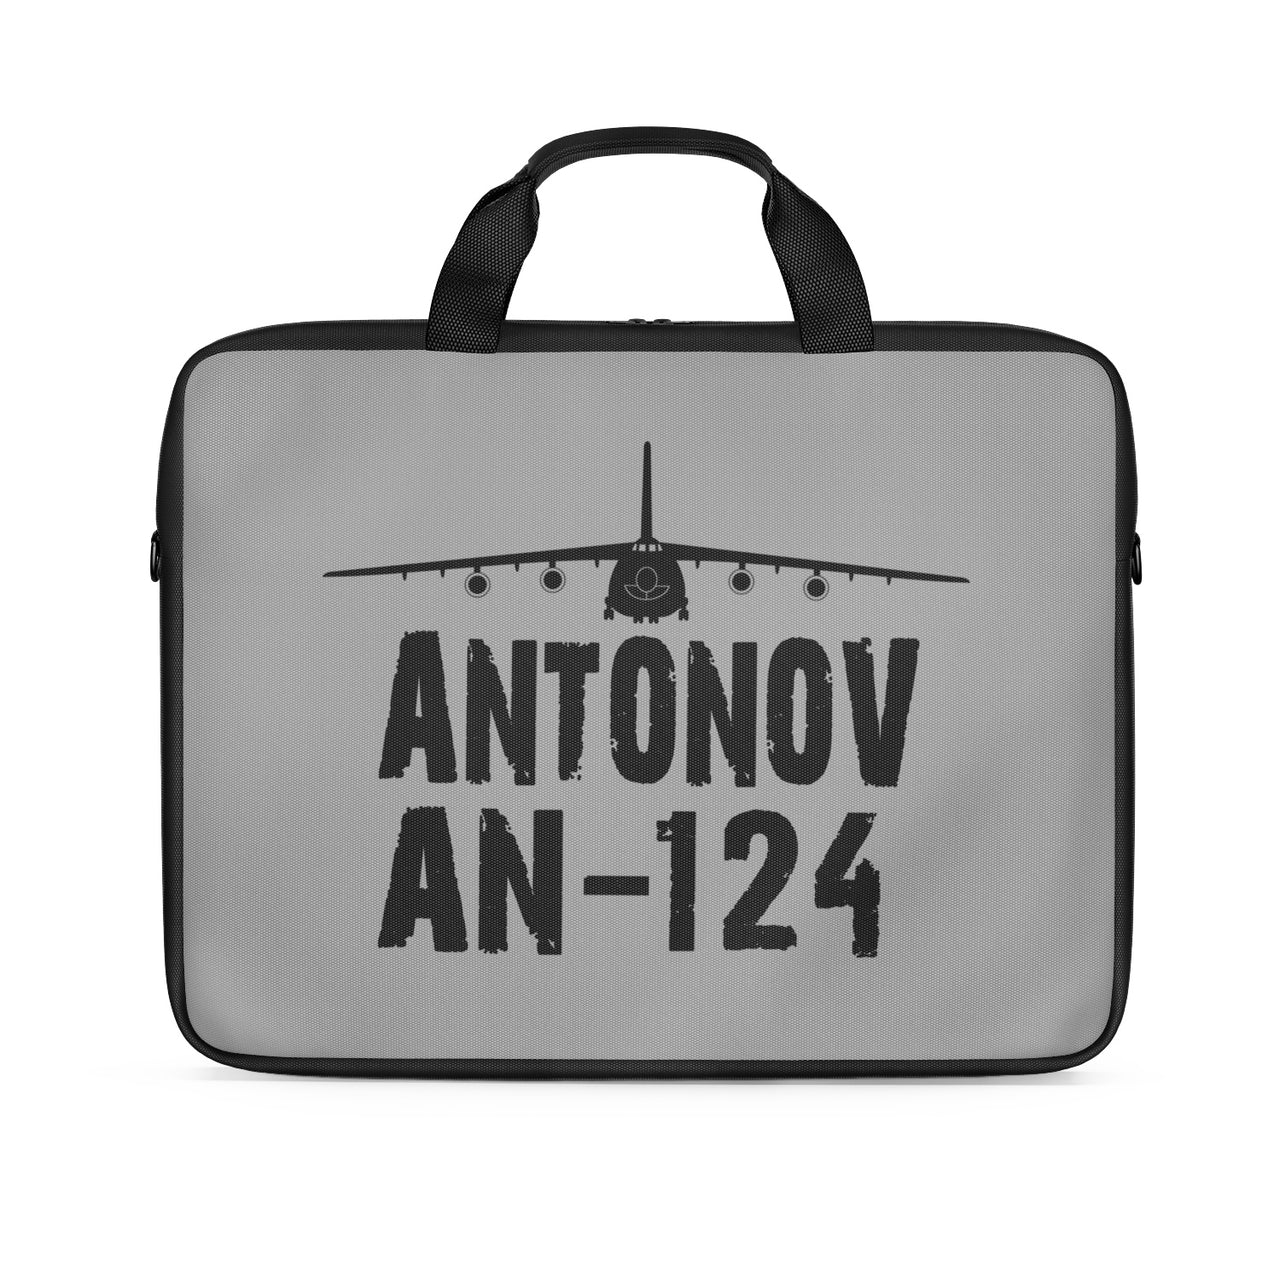 Antonov AN-124 & Plane Designed Laptop & Tablet Bags